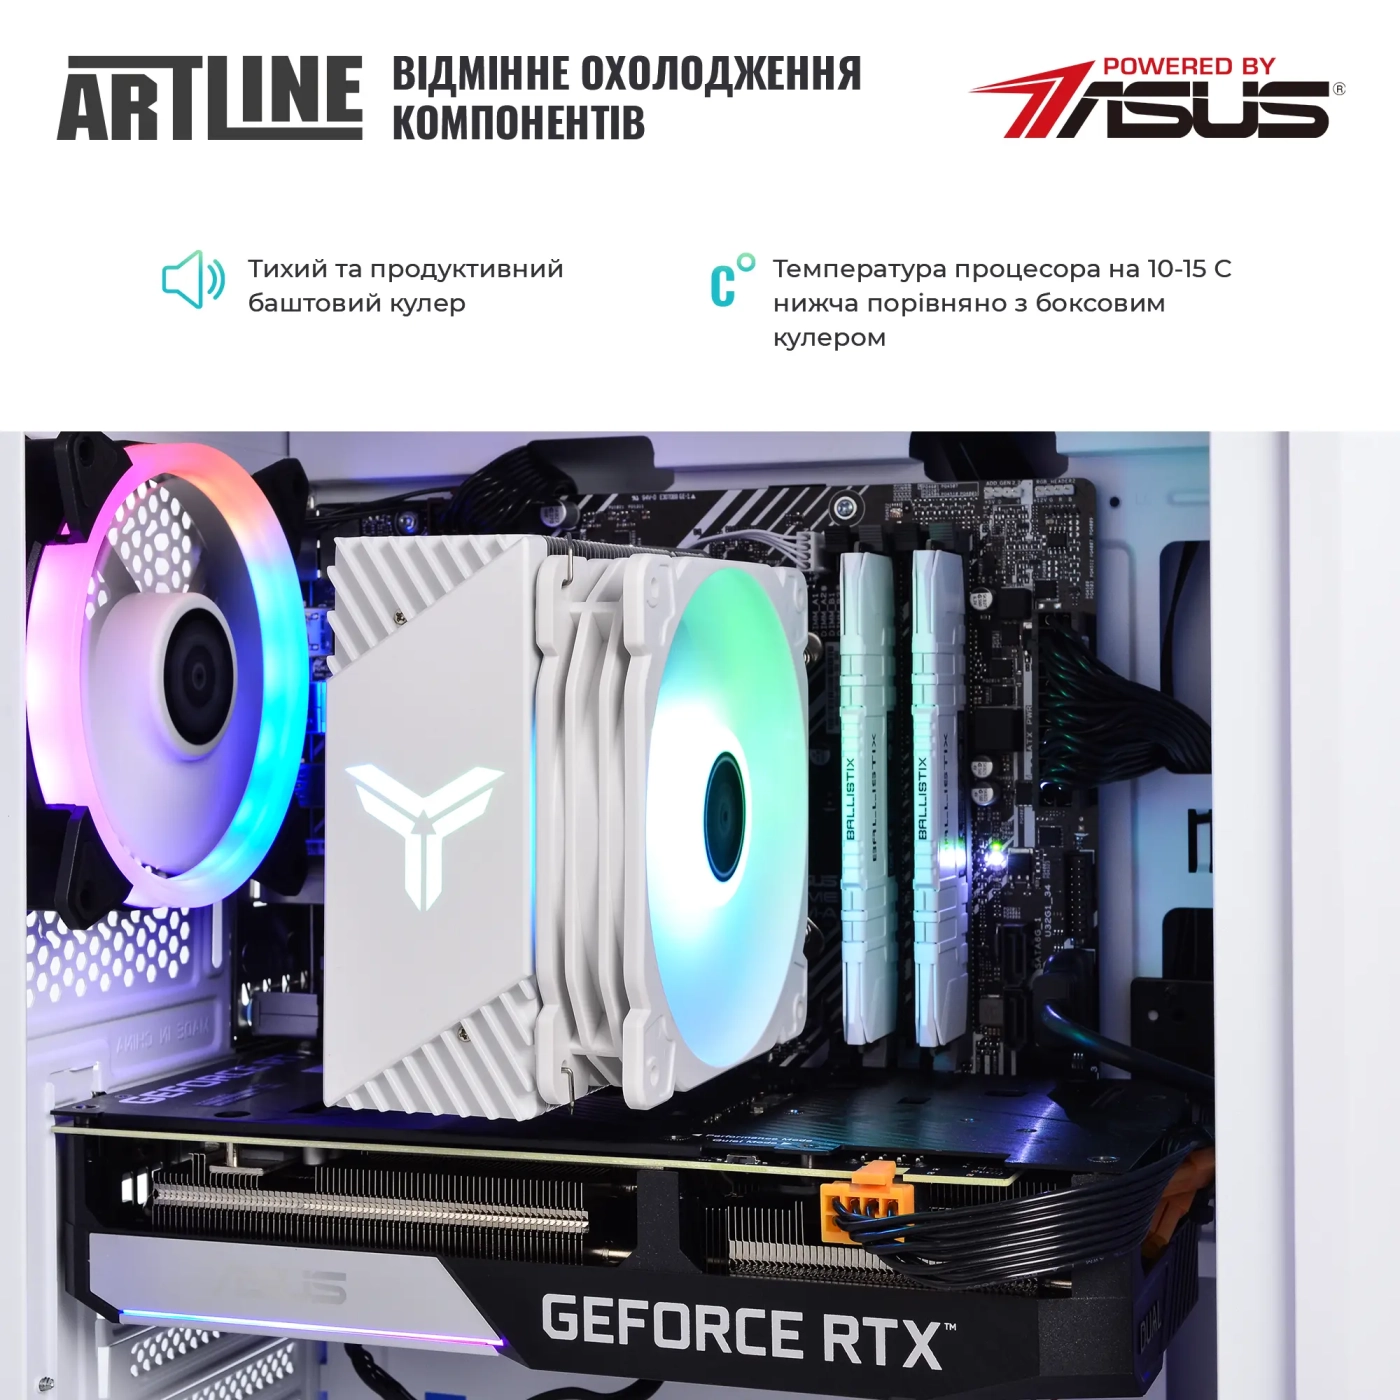 Купить Компьютер ARTLINE Gaming X49 (X49v24w) - фото 4